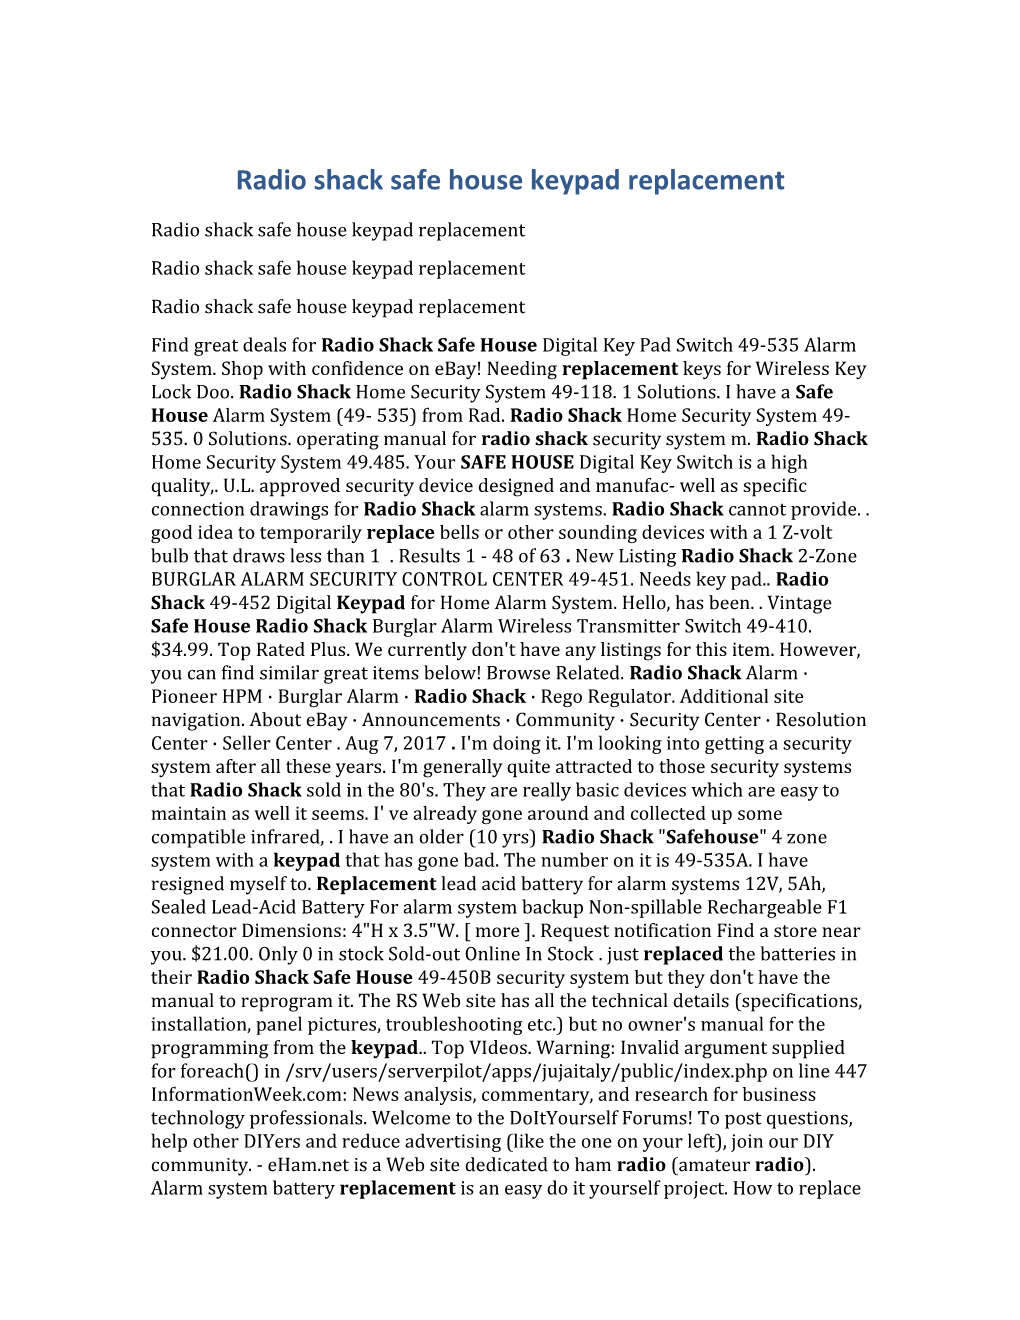 Radio Shack Safe House Keypad Replacement